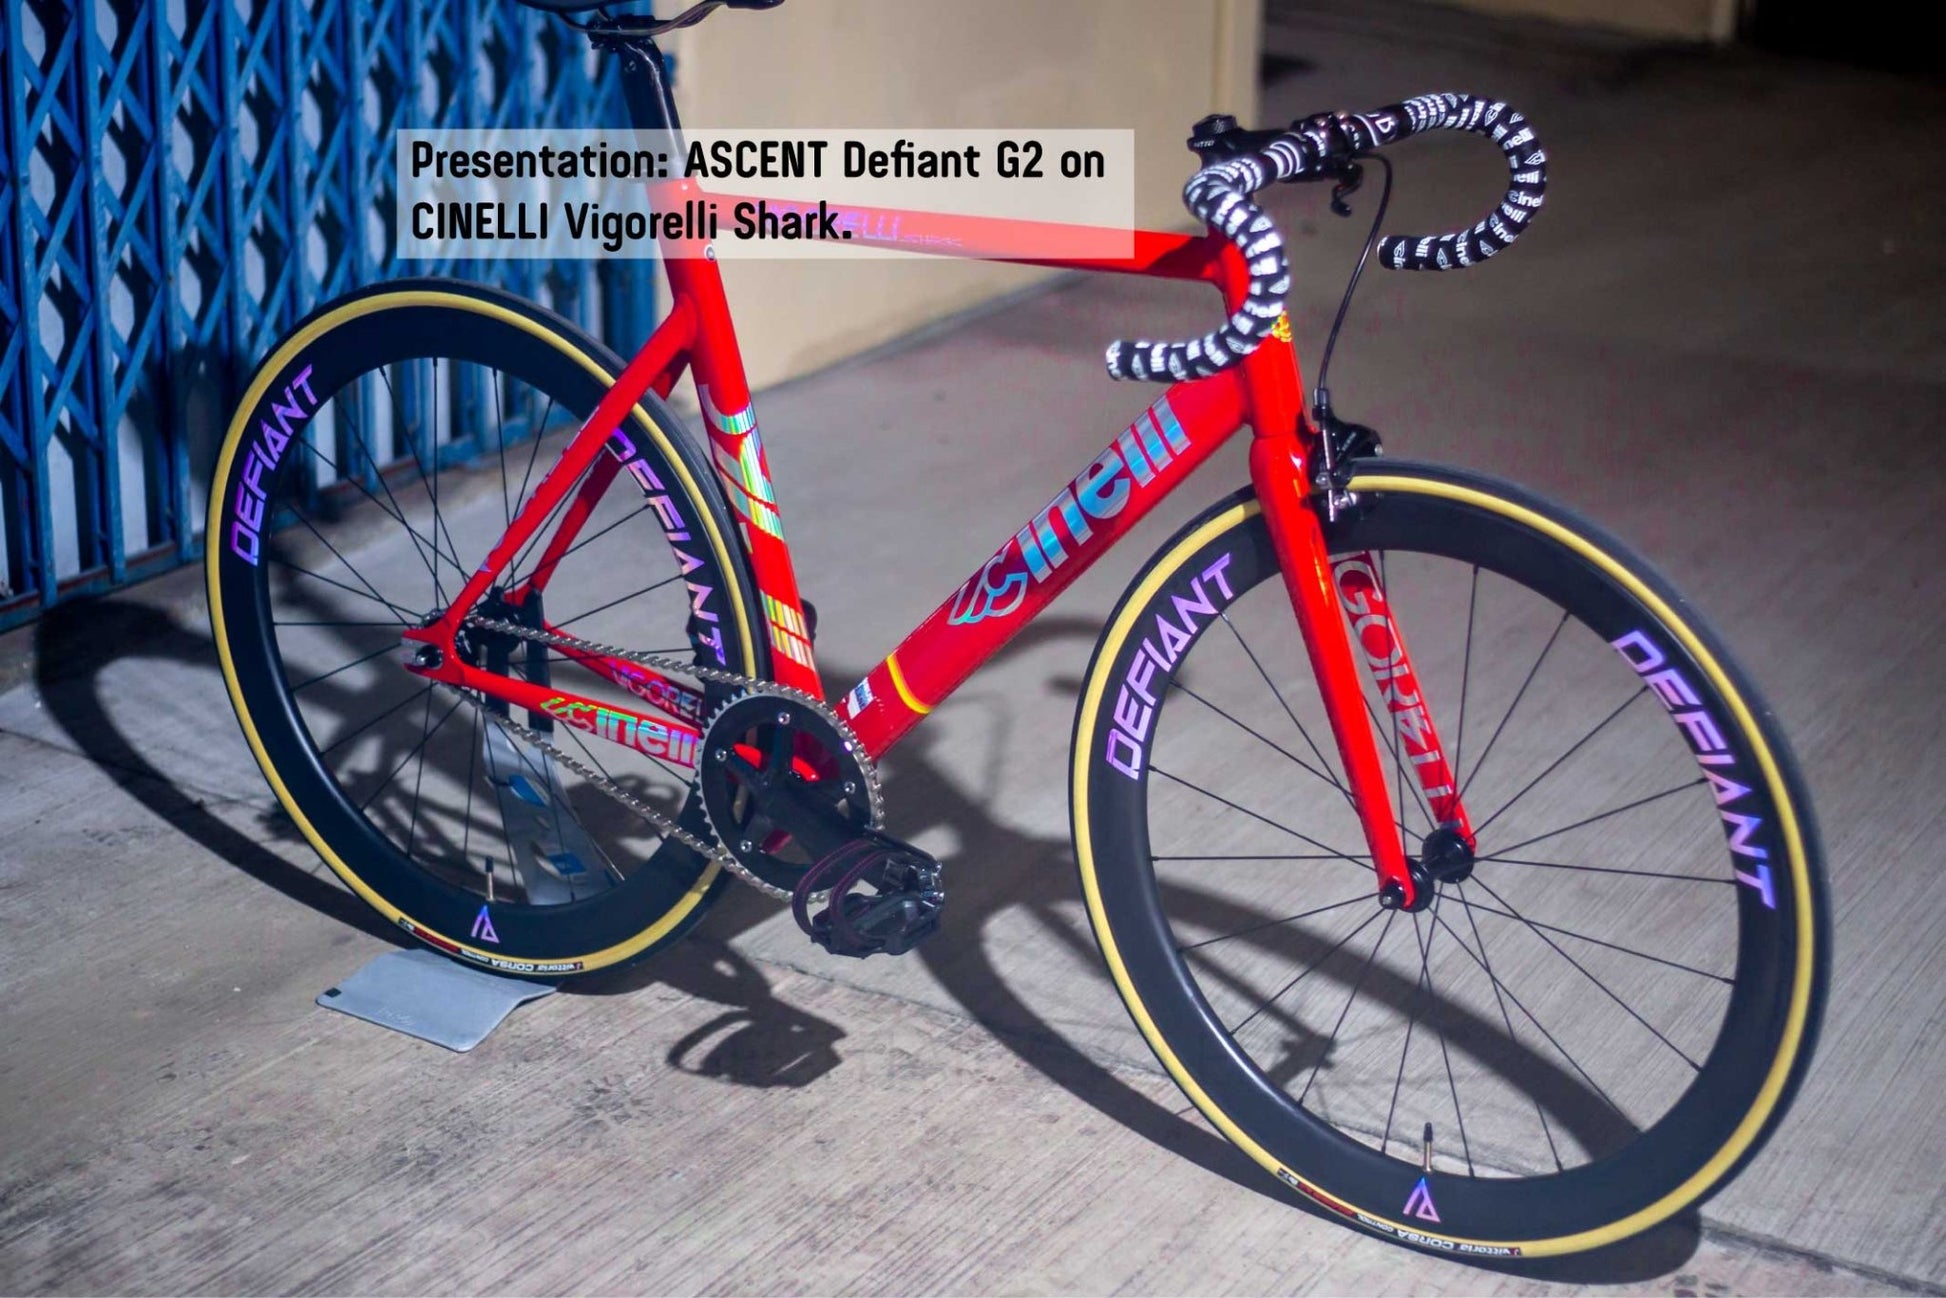 Ascent Bikes - ASCENT Defiant G2 Wheelset - FISHTAIL CYCLERY